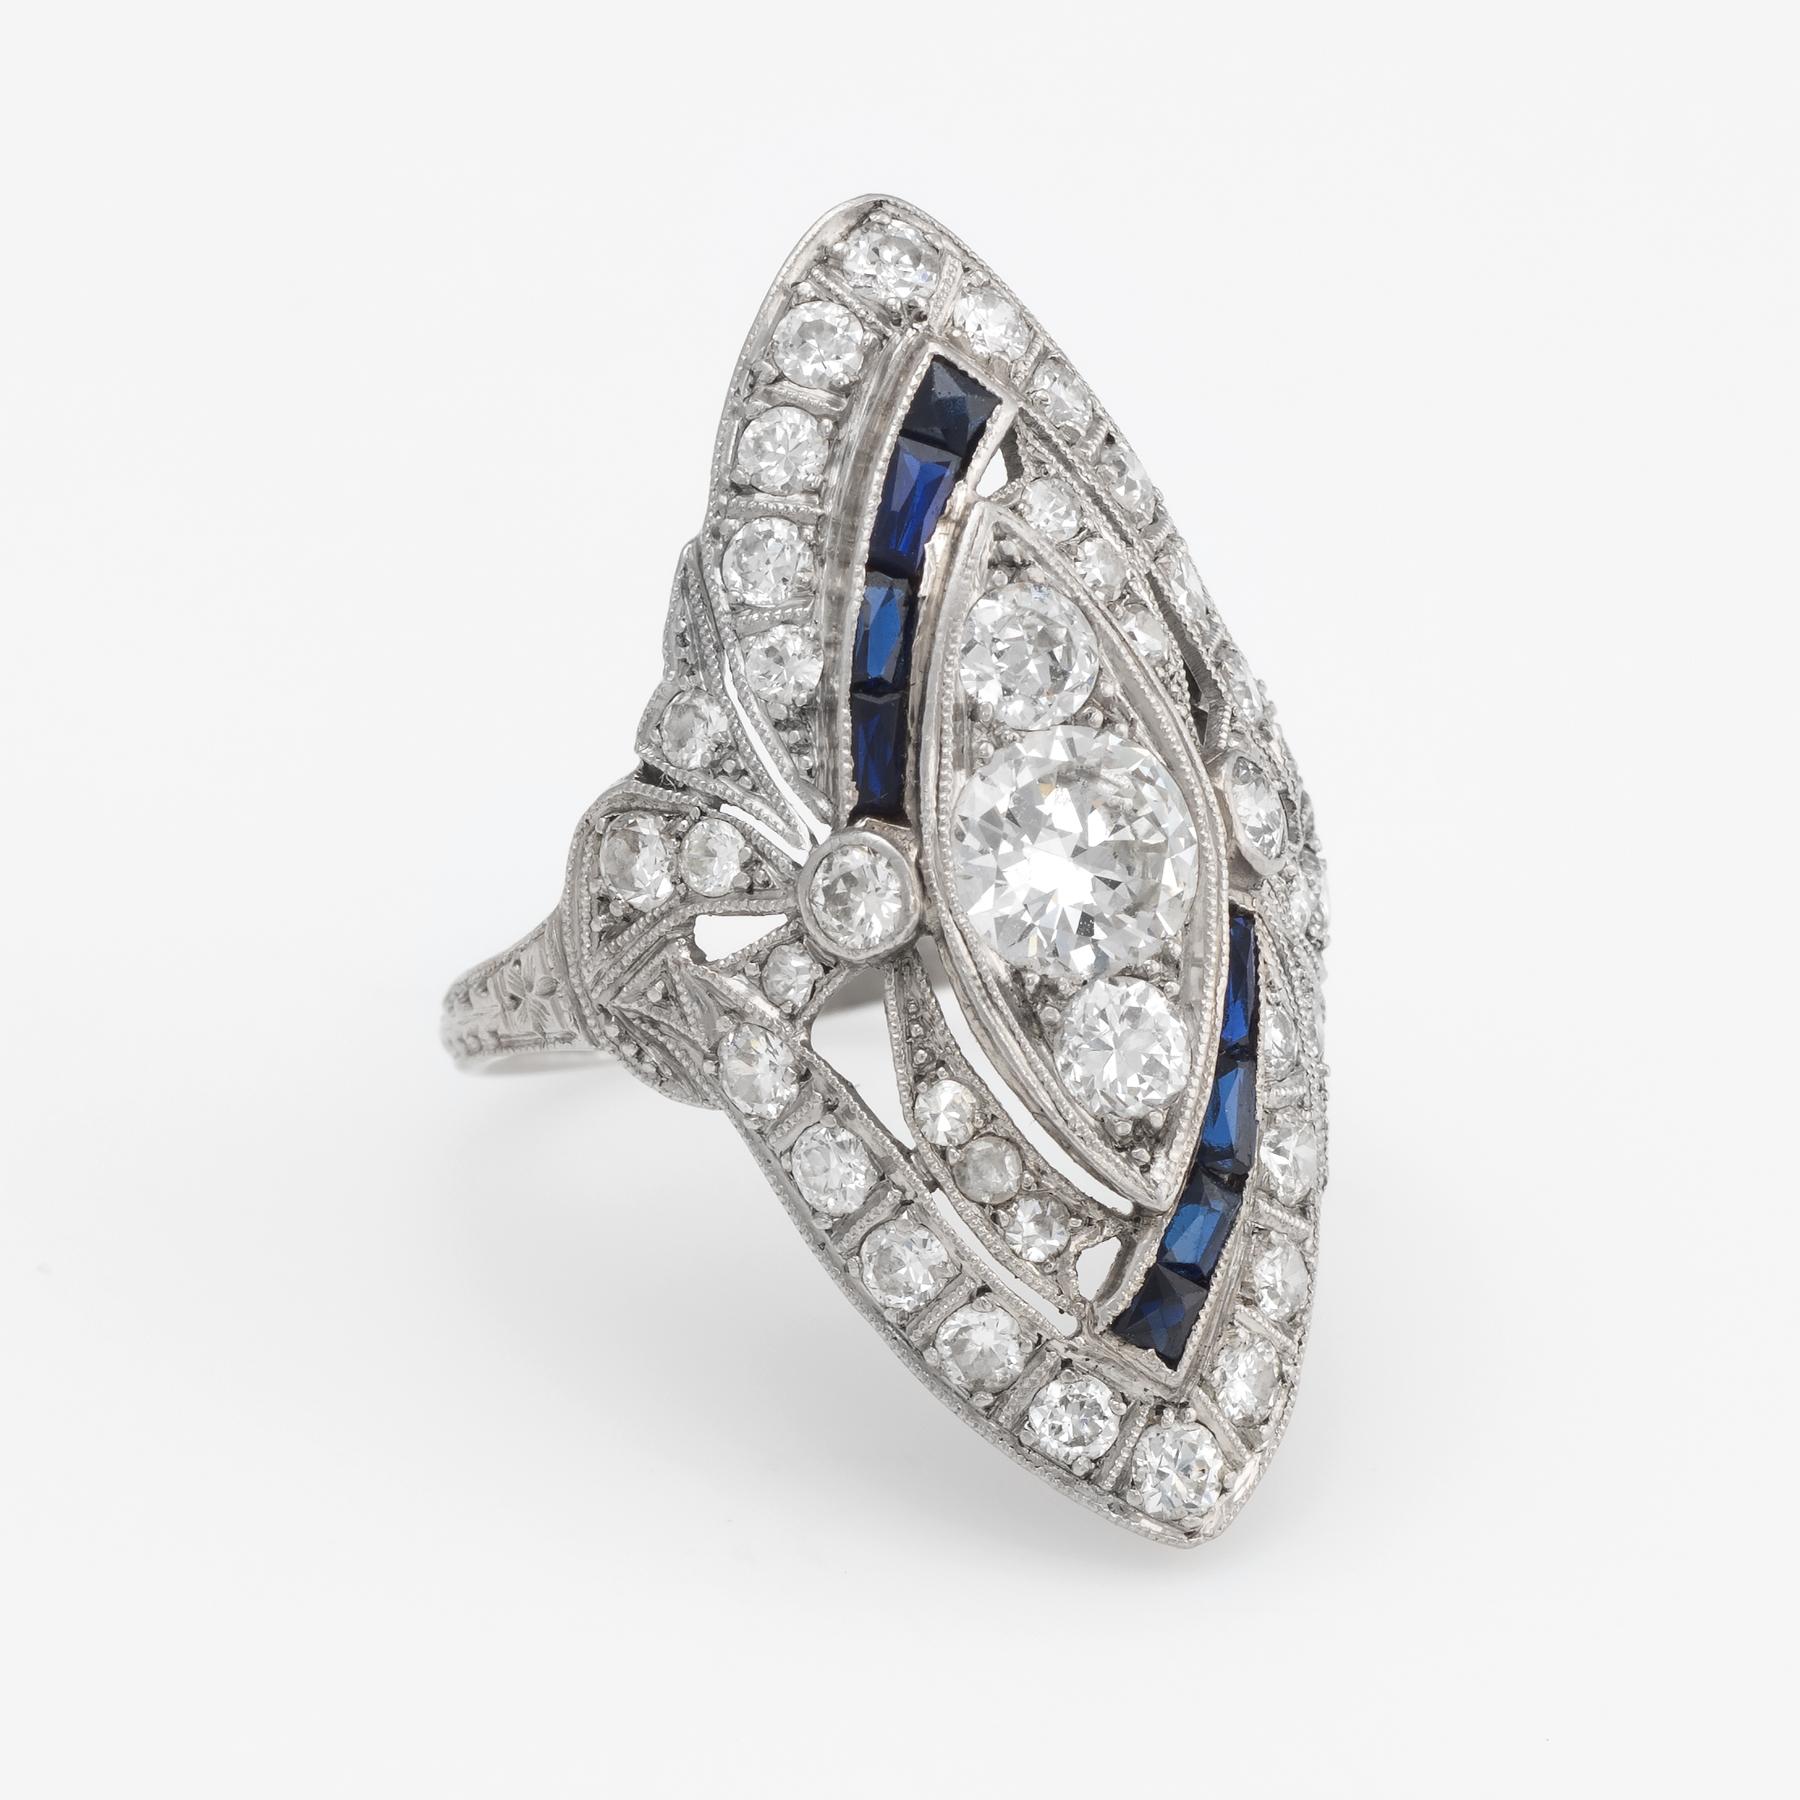 Art Deco Antique Deco Diamond Sapphire Ring Platinum Navette Cocktail Vintage Jewelry 5.5